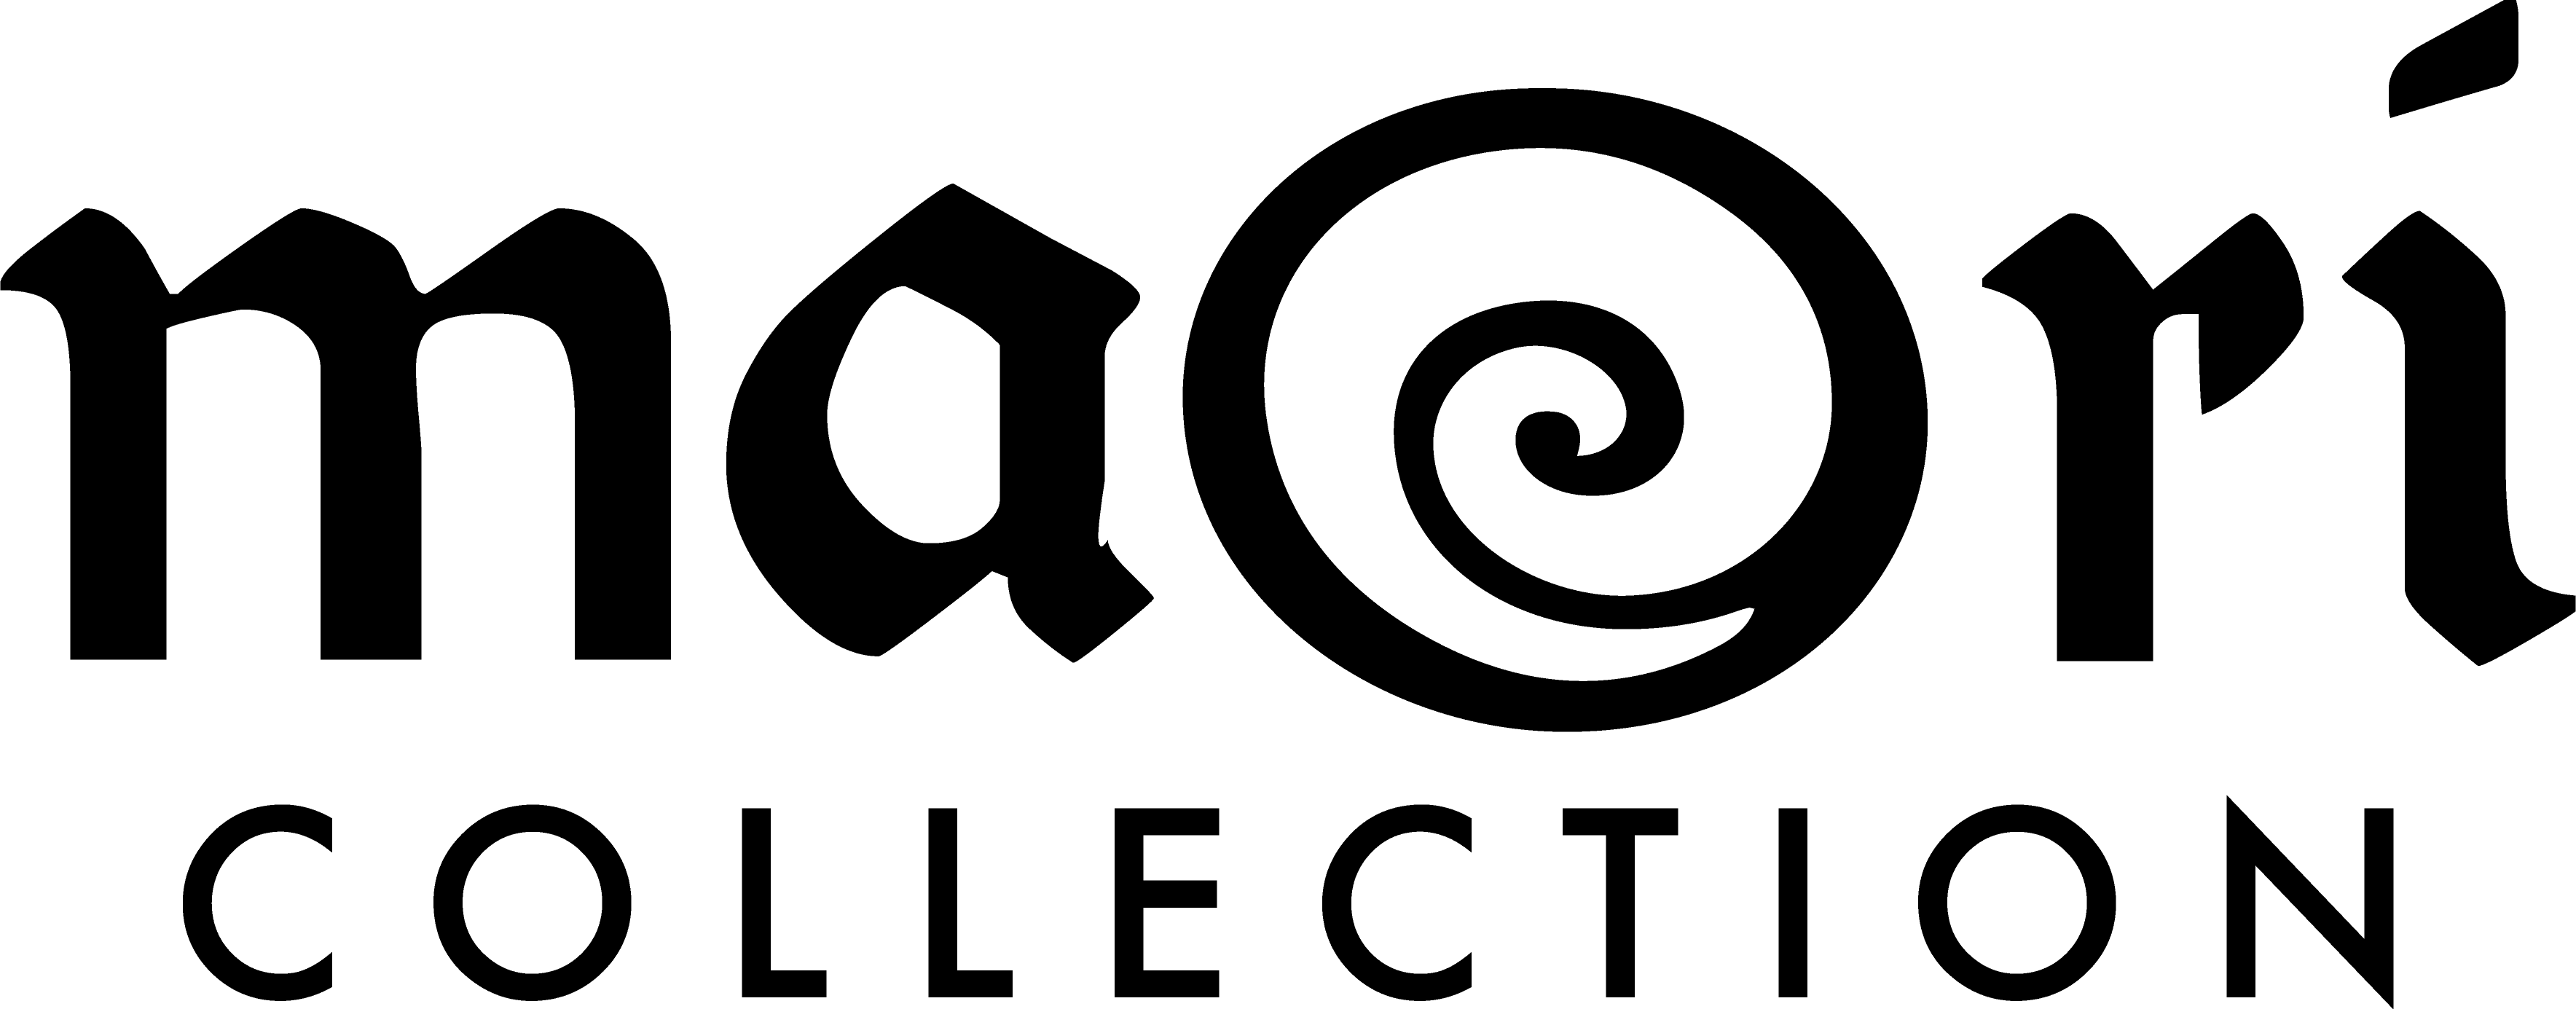 Maori collection life